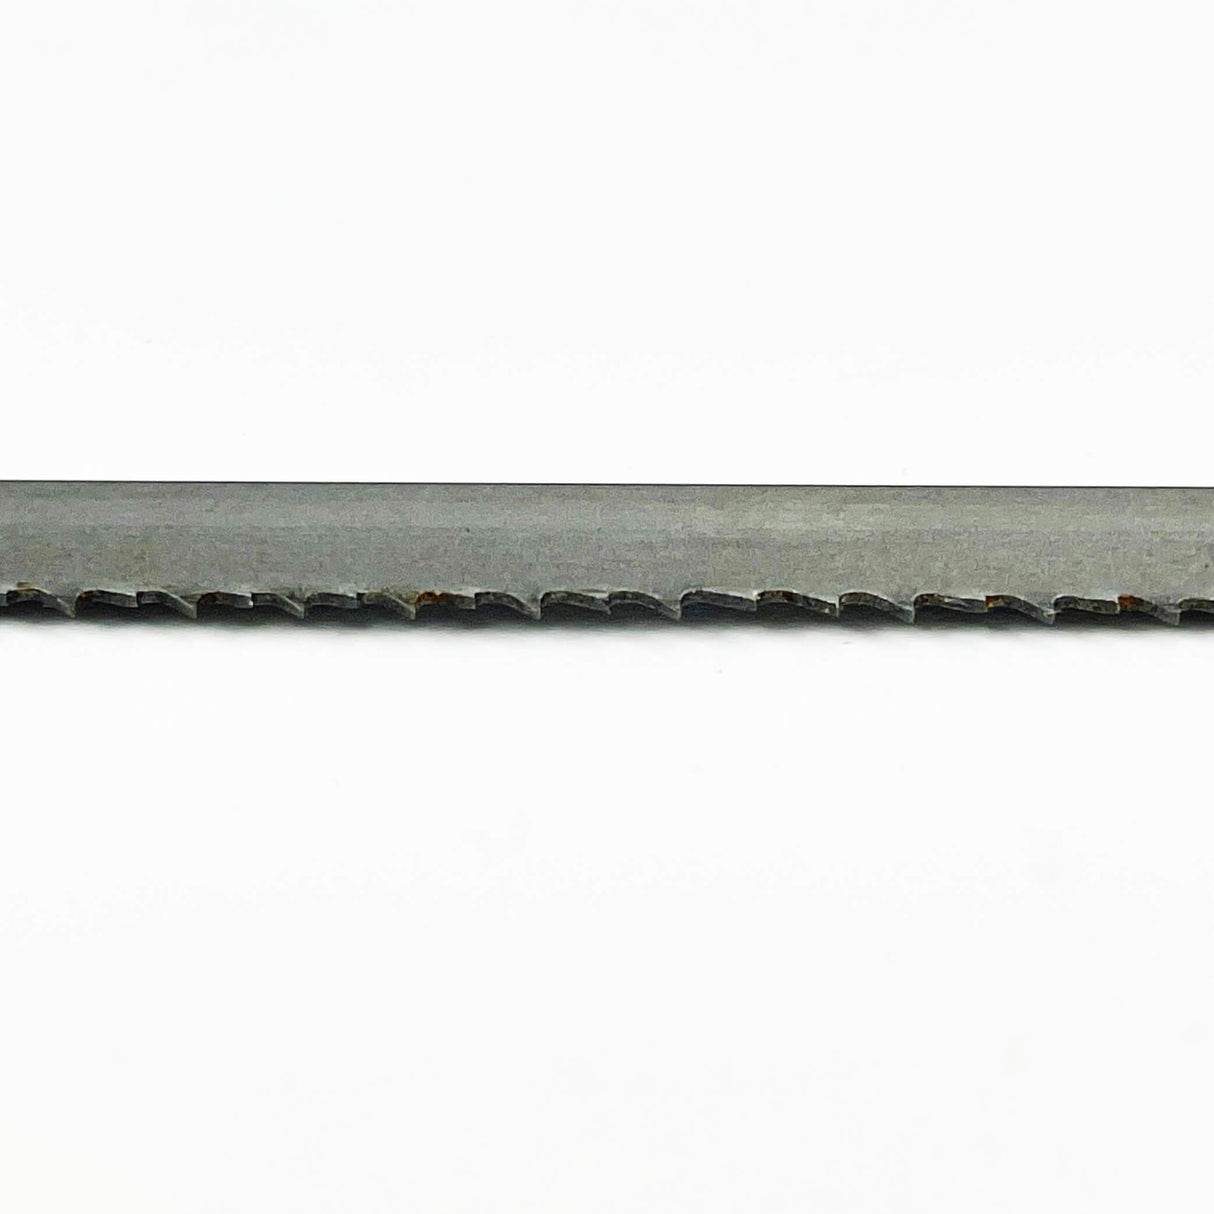 3660mm Long x 13mm Wide COBALT M42 Bi-Metal Band Saw - Pack of 2 Blades